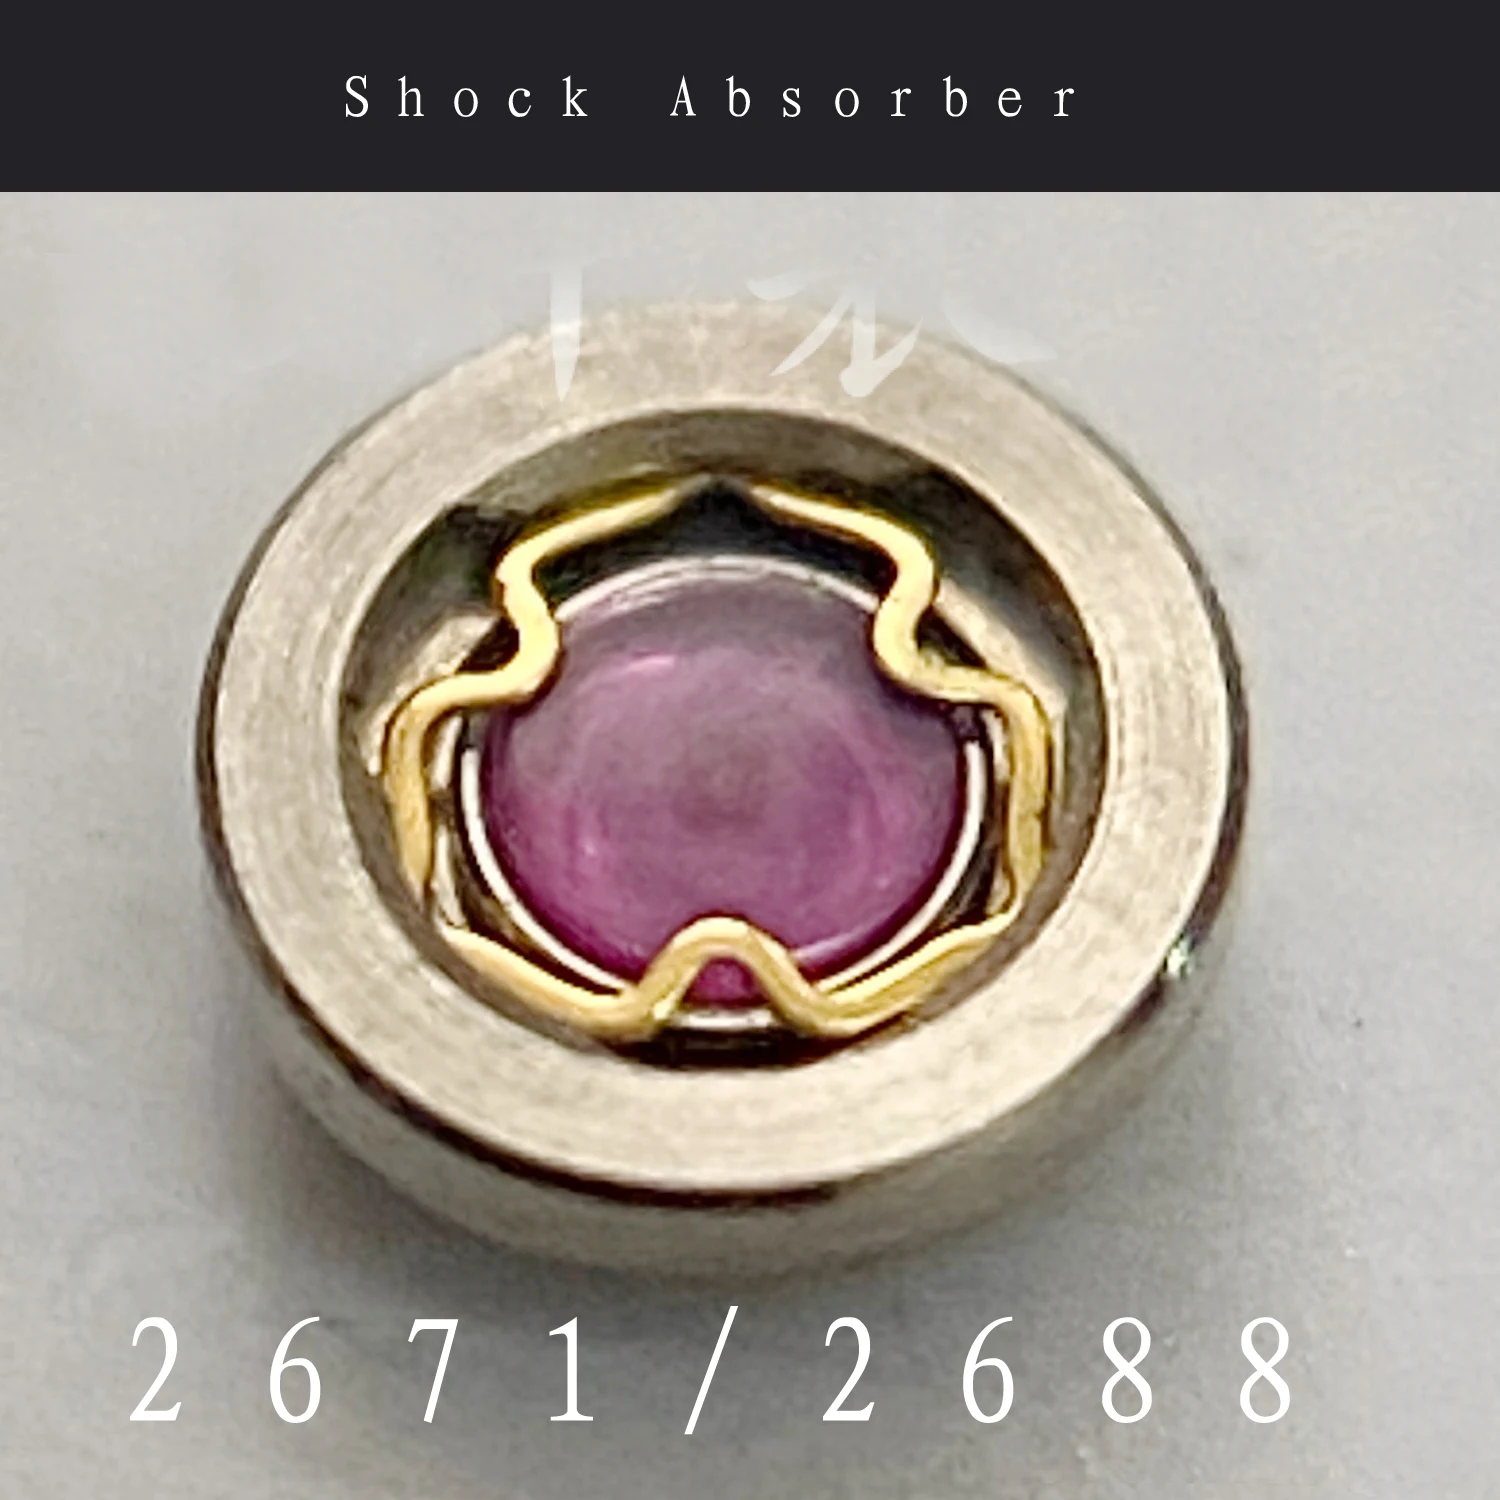 ETA 2671 2688 movement parts shock absorber stone parts